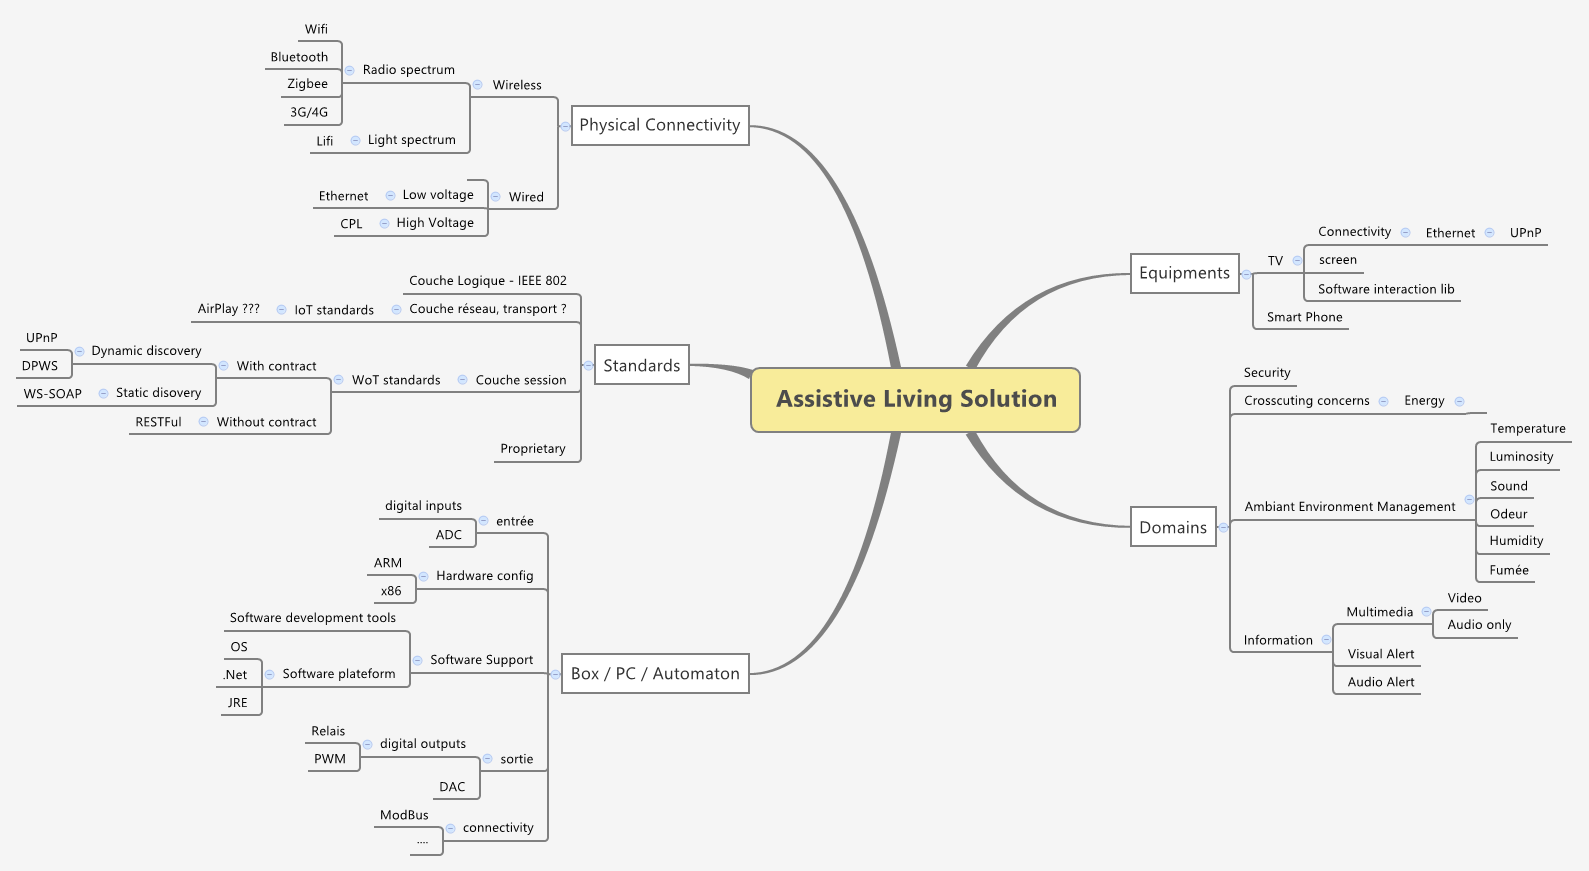 recherche:masters:palma_adam:assistive_living_solution.png